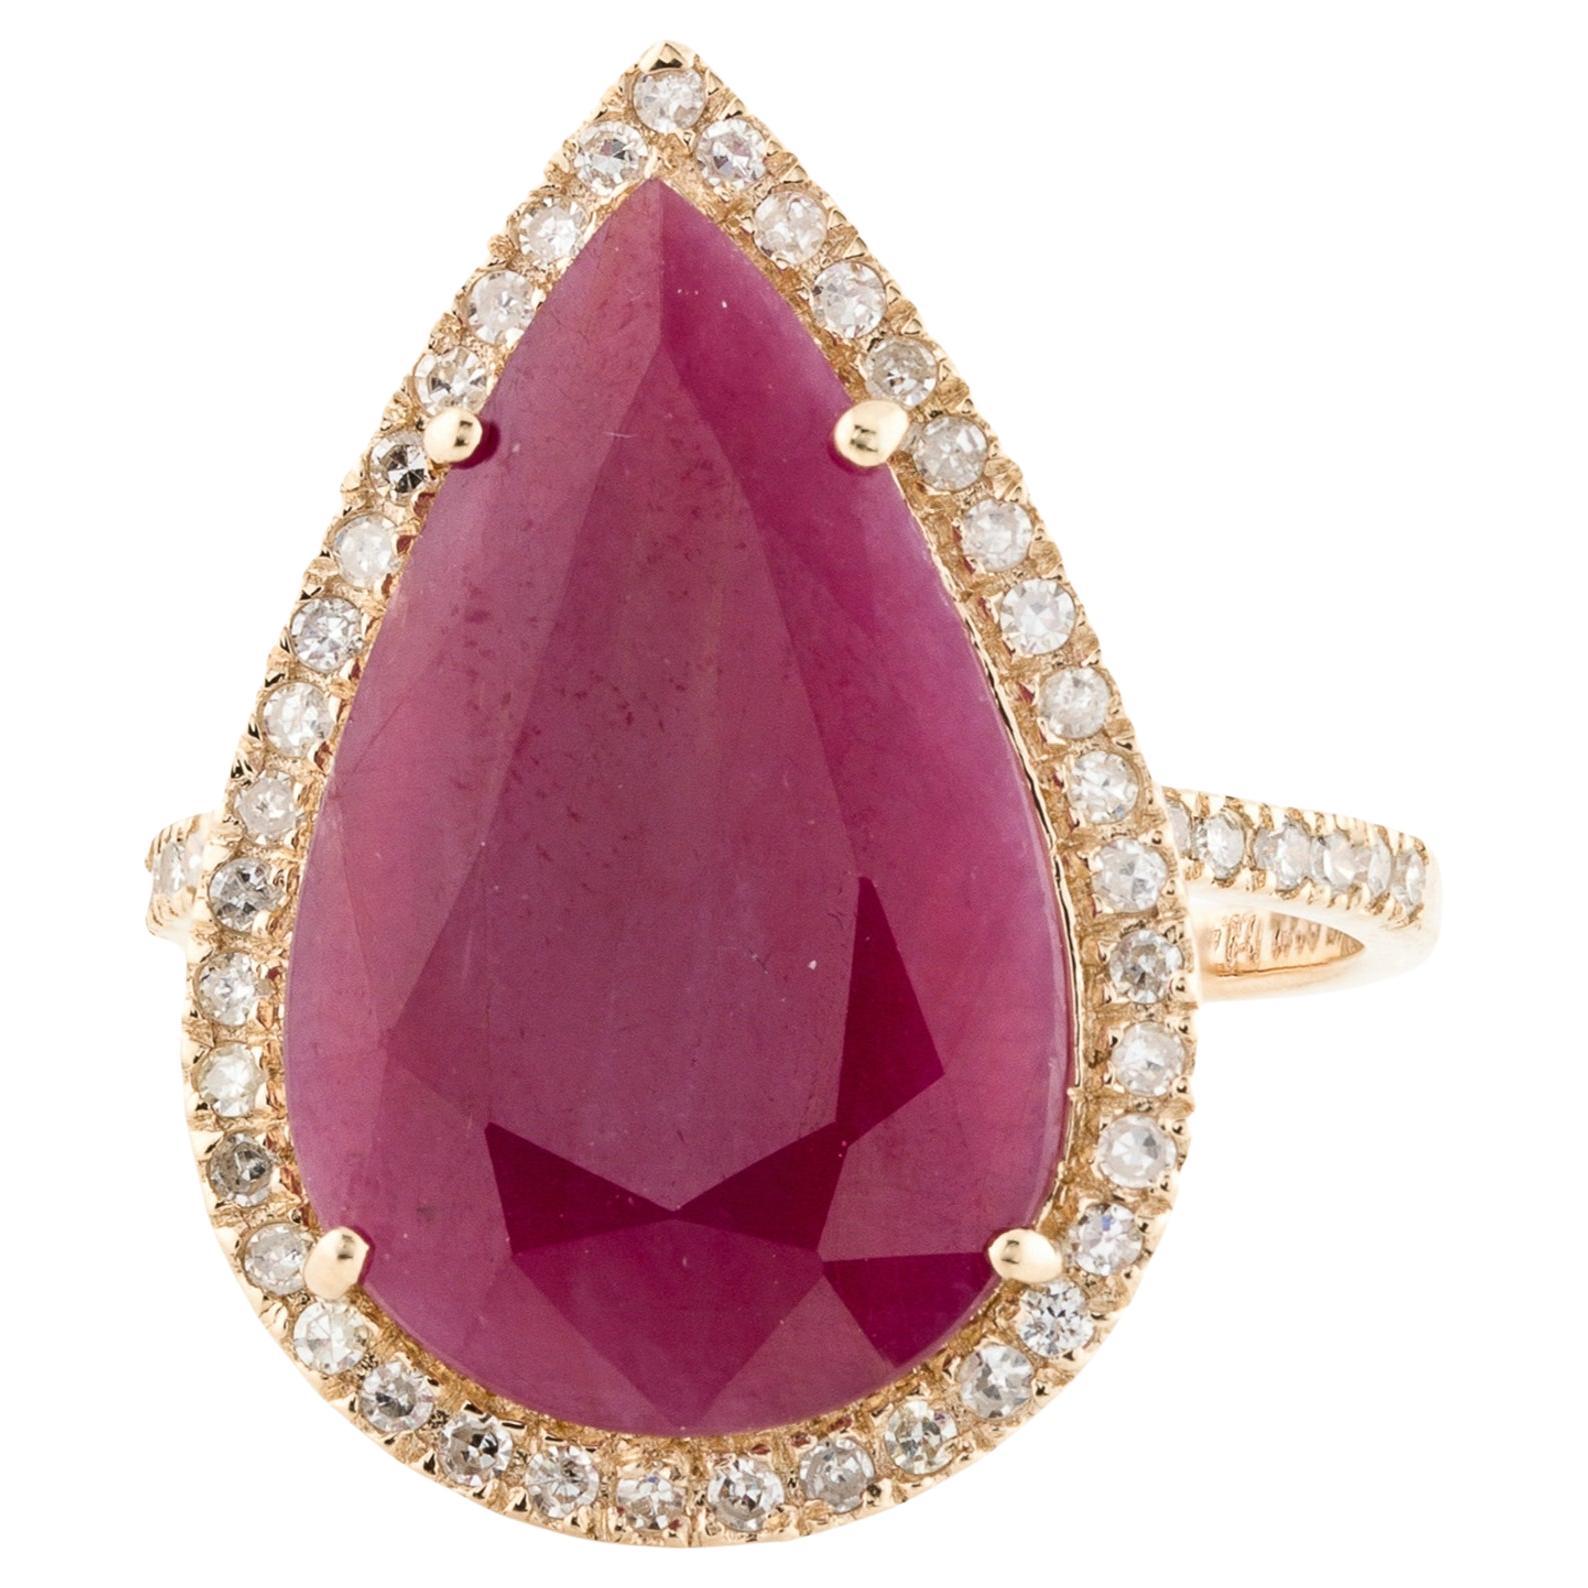 Dazzling 14K Gold 6.16ct Ruby & Diamond Cocktail Ring - Size 7.5 - Fine Jewelry